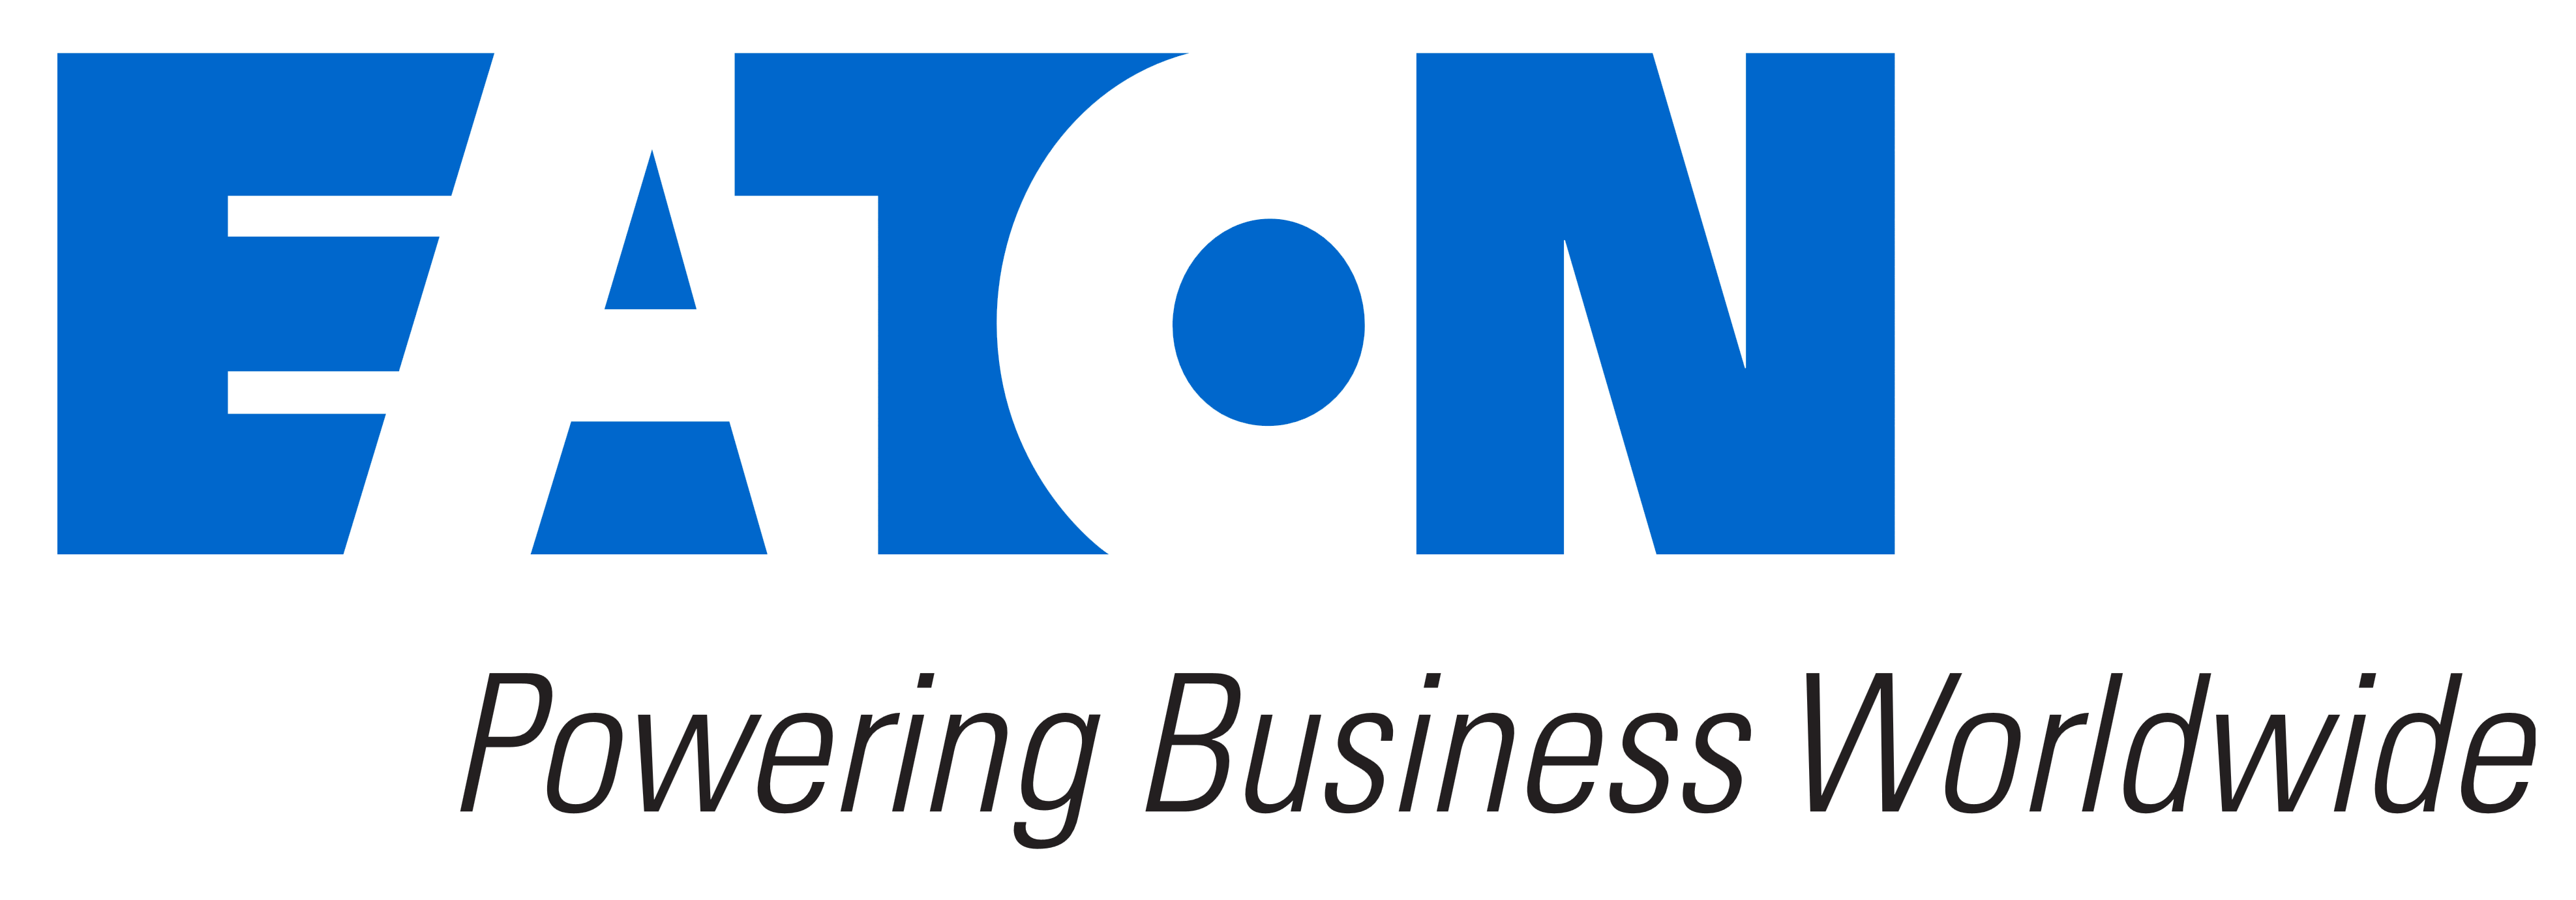 Eaton-corporation-logo-